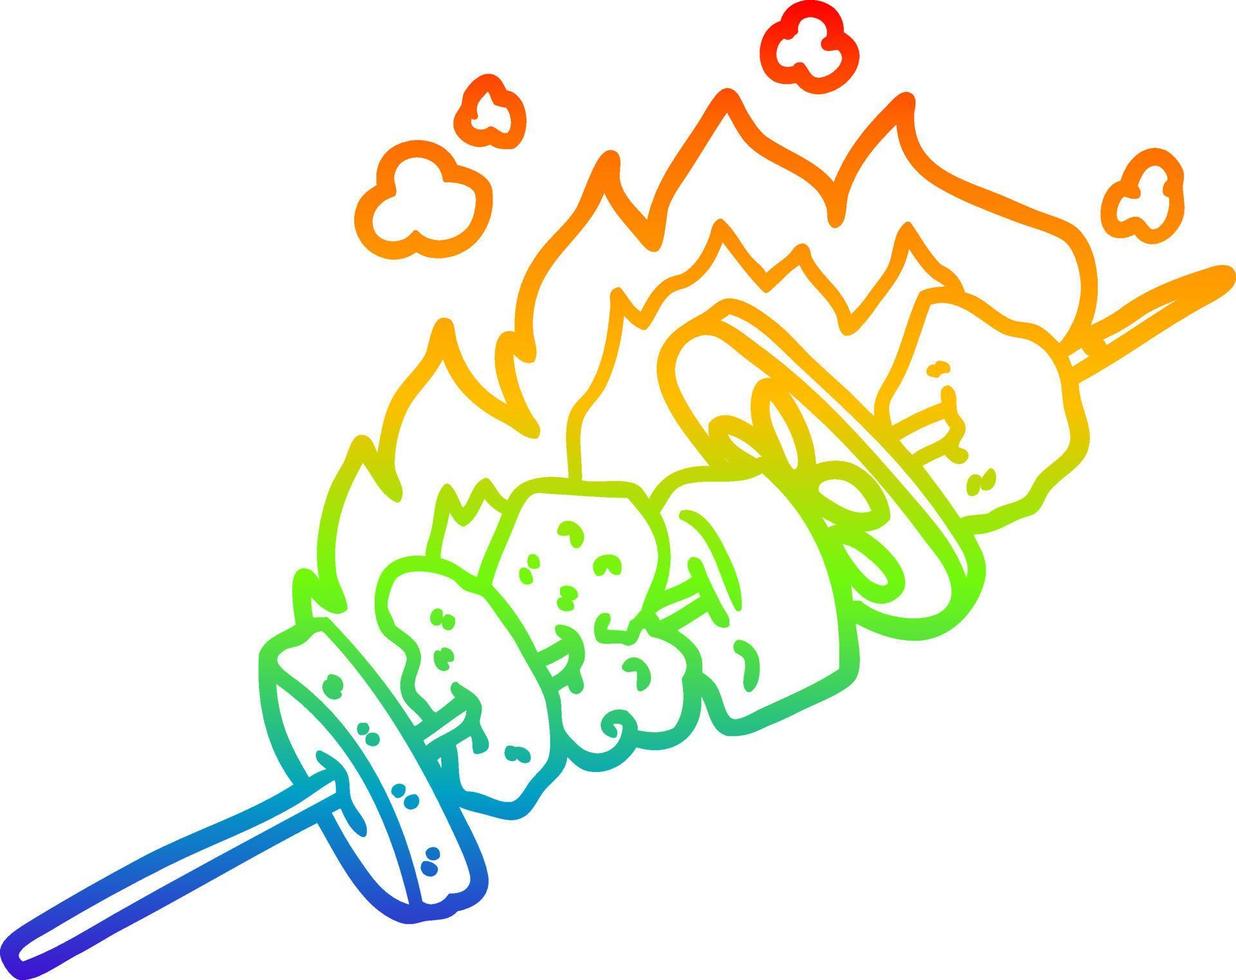 rainbow gradient line drawing cartoon kebab sticks vector